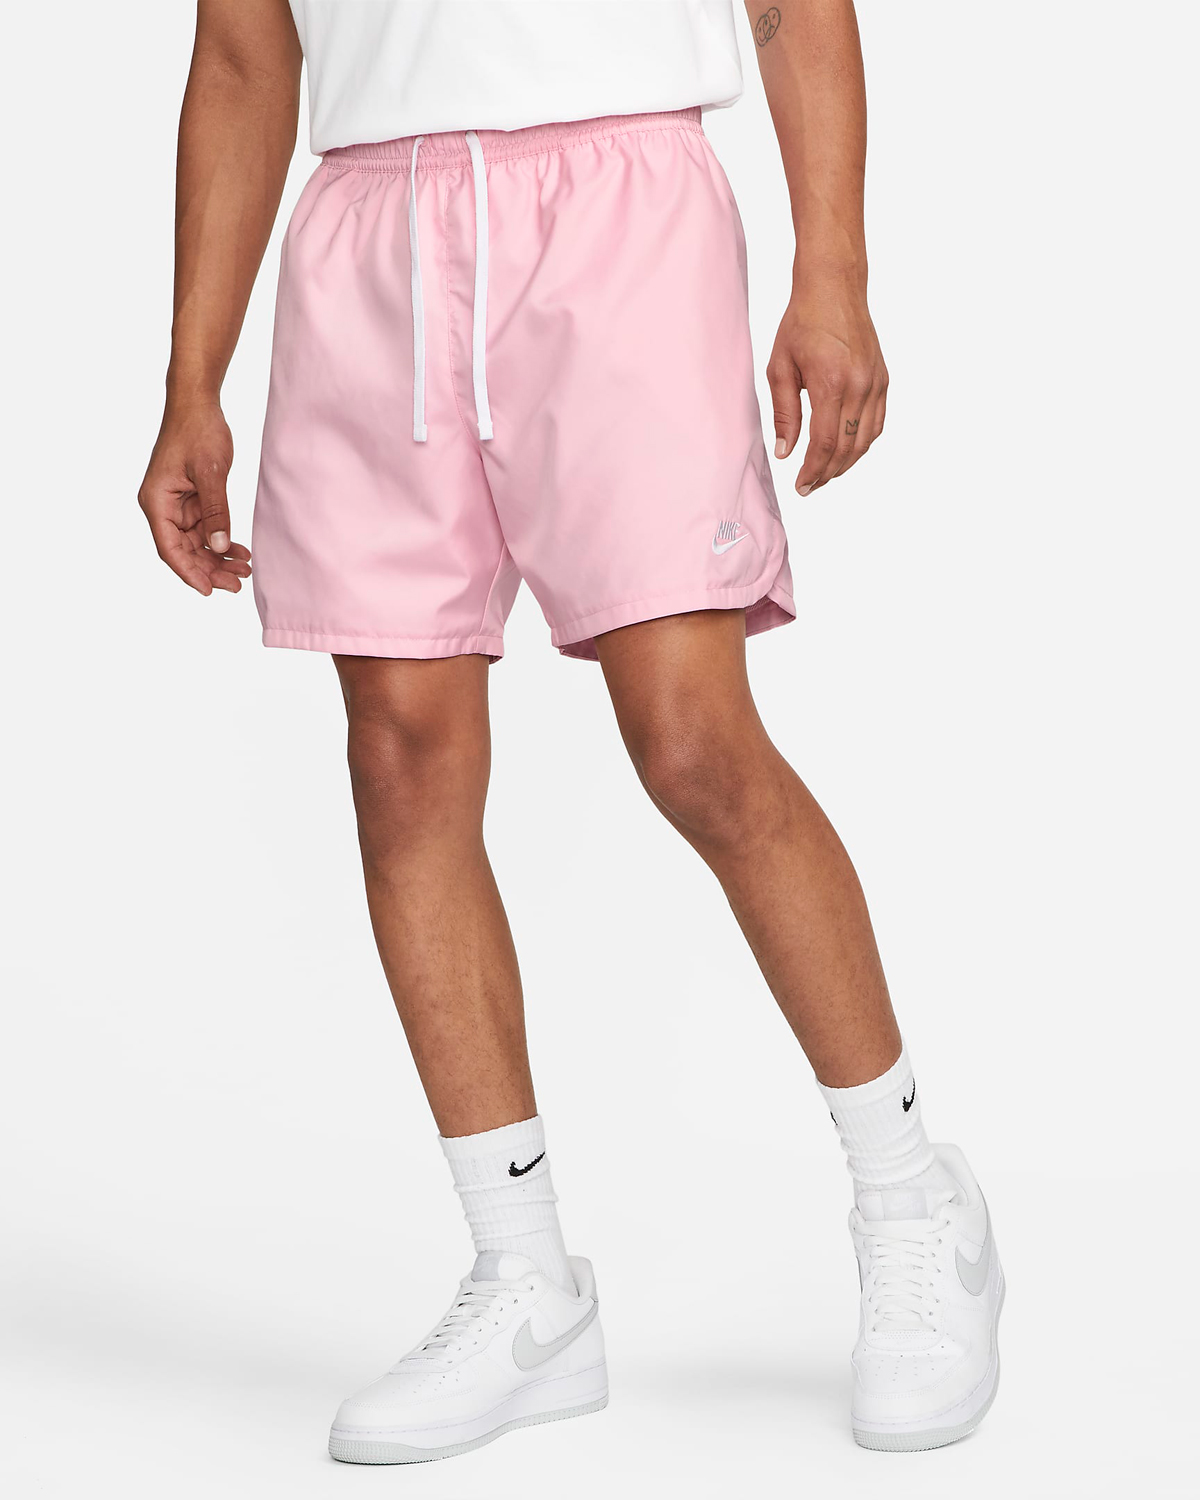 nike-flow-shorts-medium-soft-pink